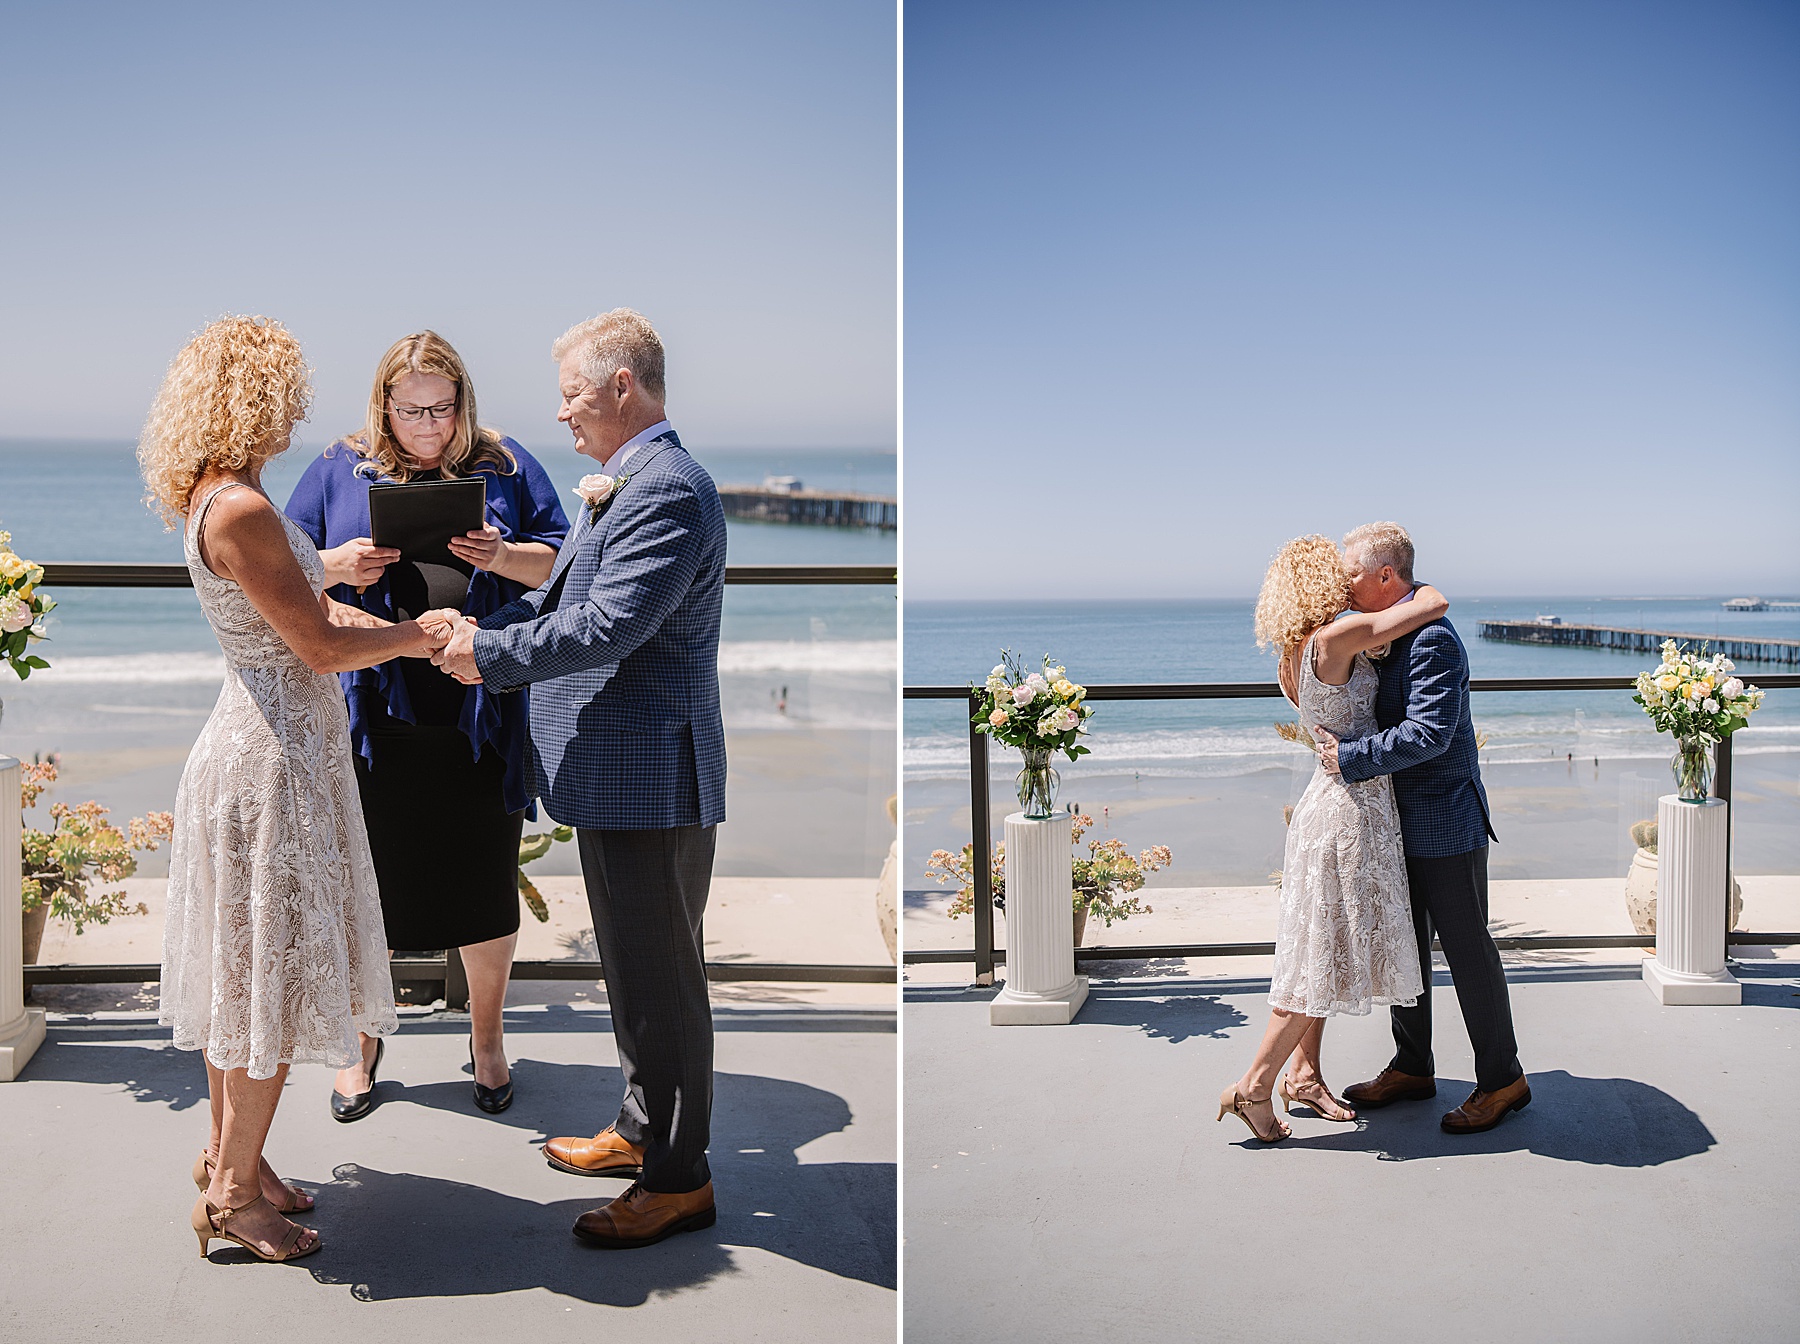 2022 Best of Weddings | A San Luis Obispo Photographer’s End-of-the-Year Photo Recap